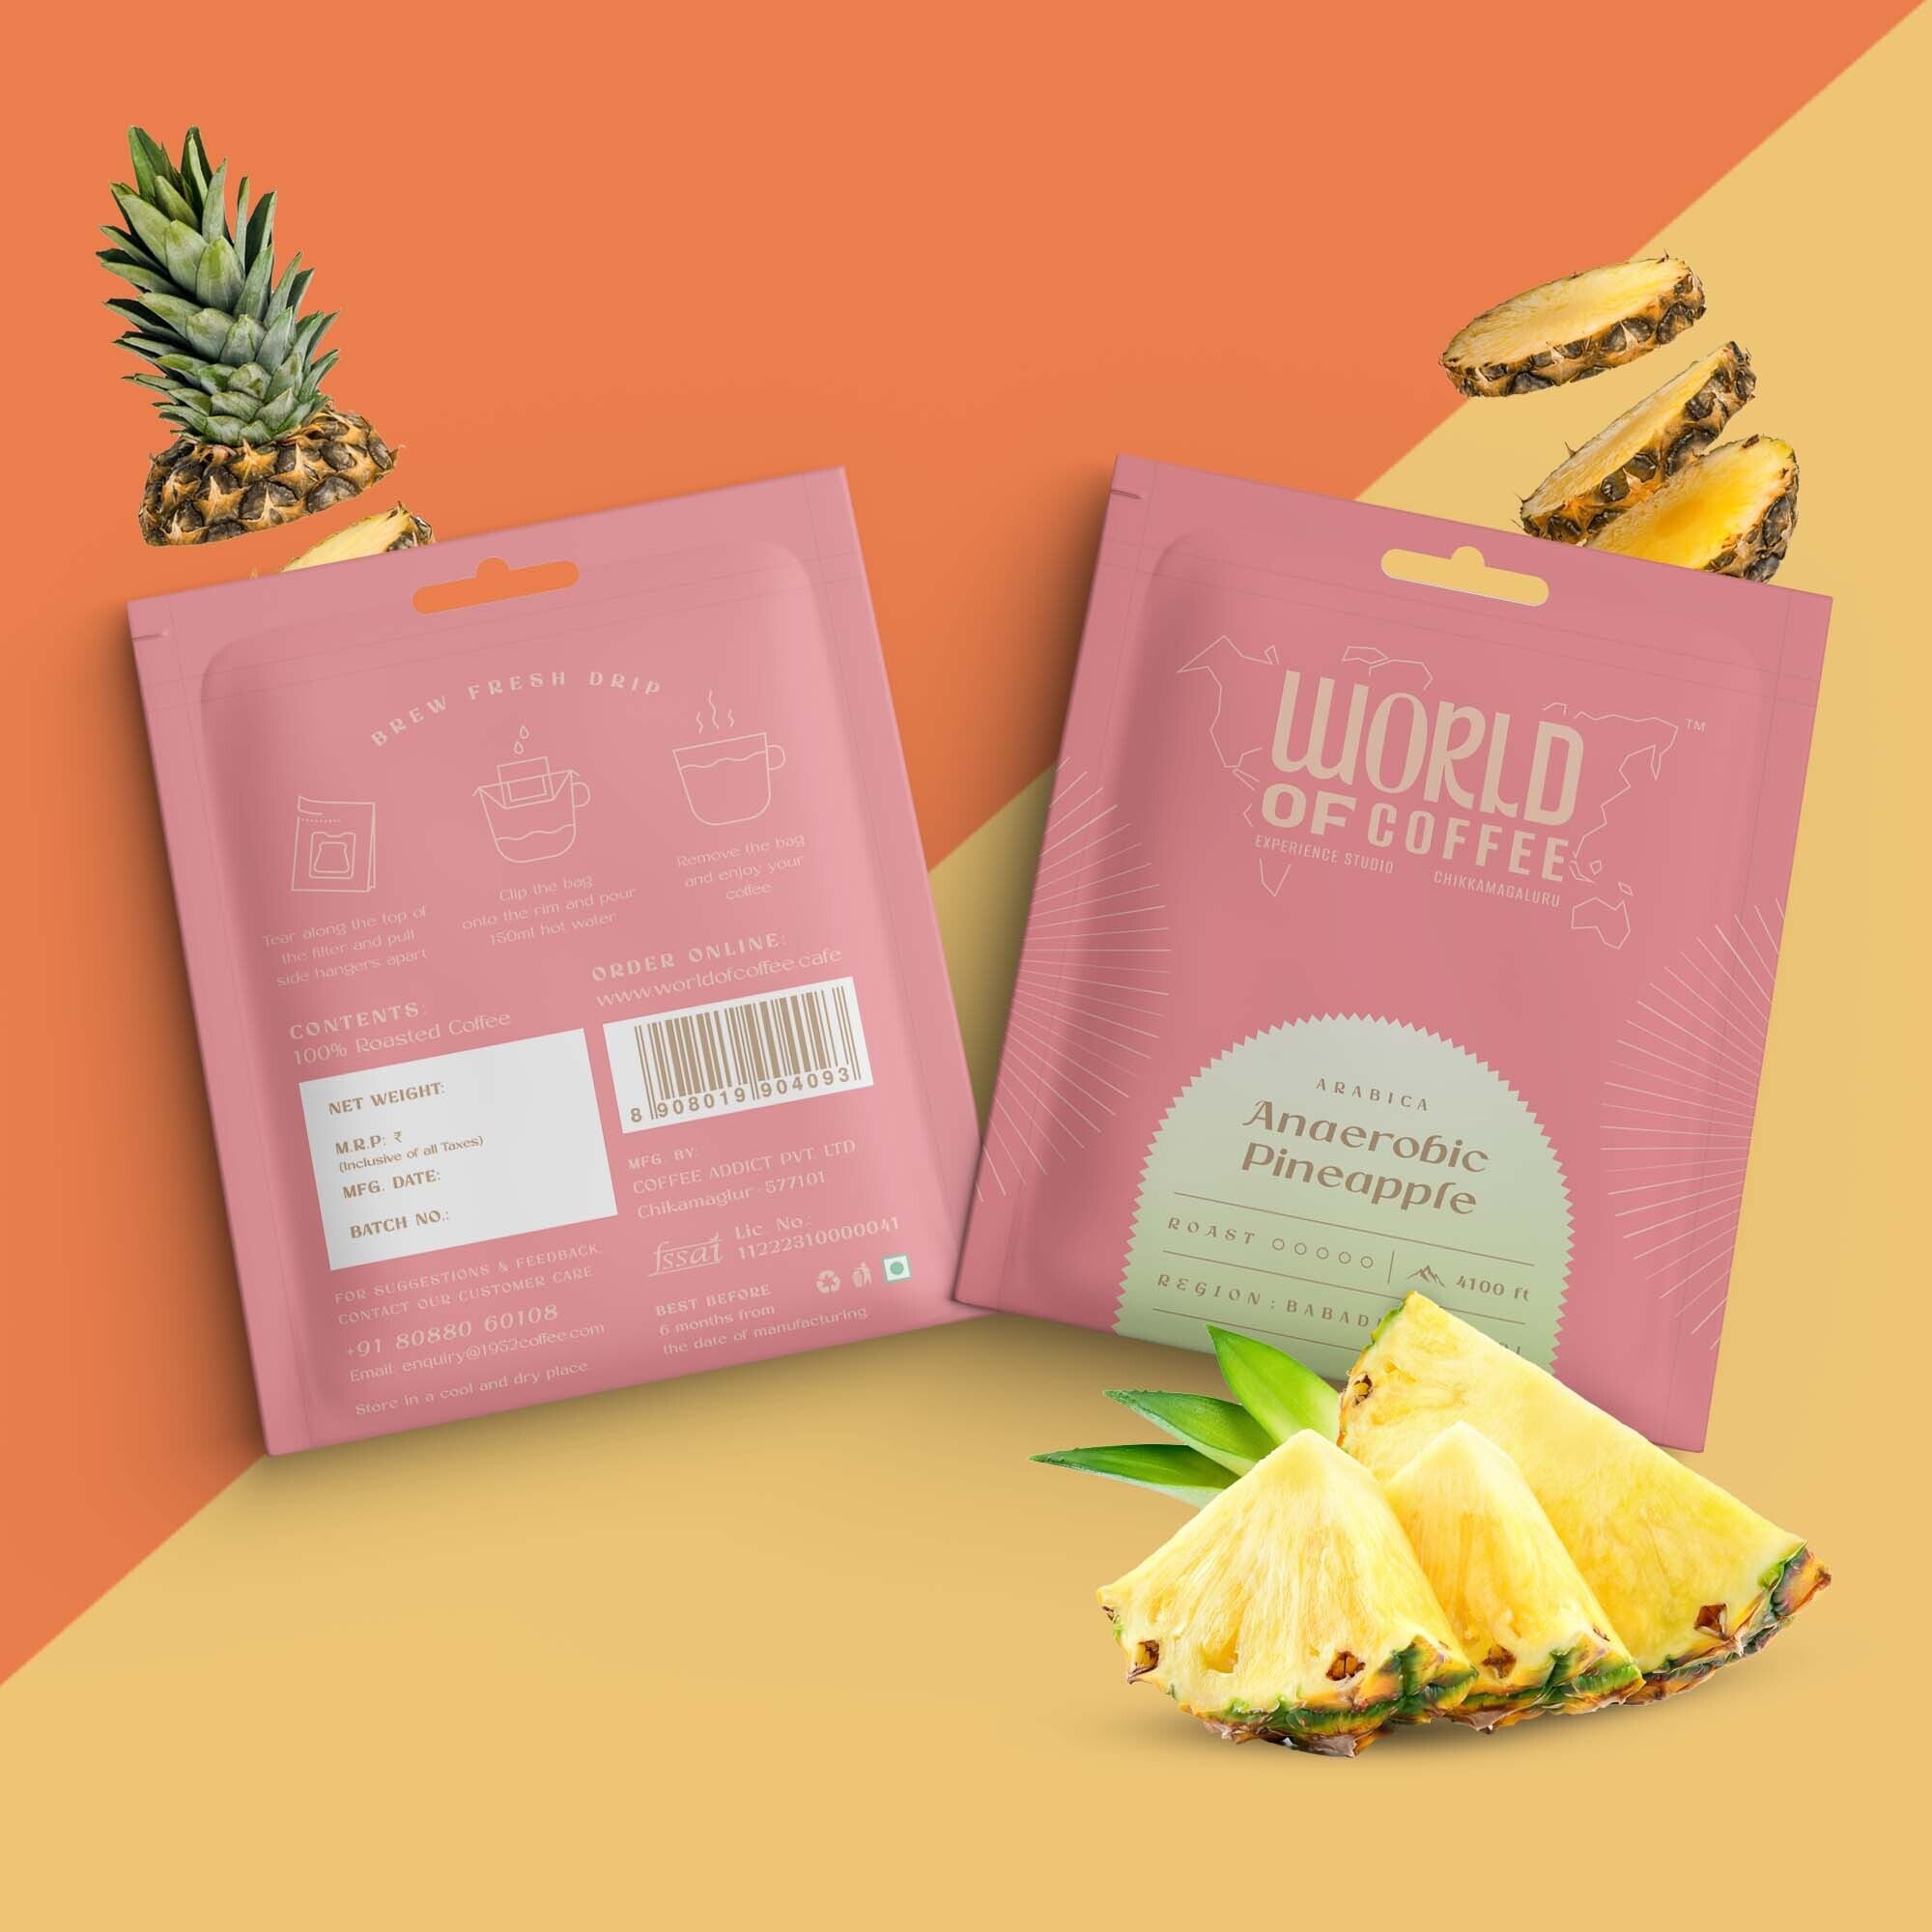 Anerobic Pineapple Drip Bag